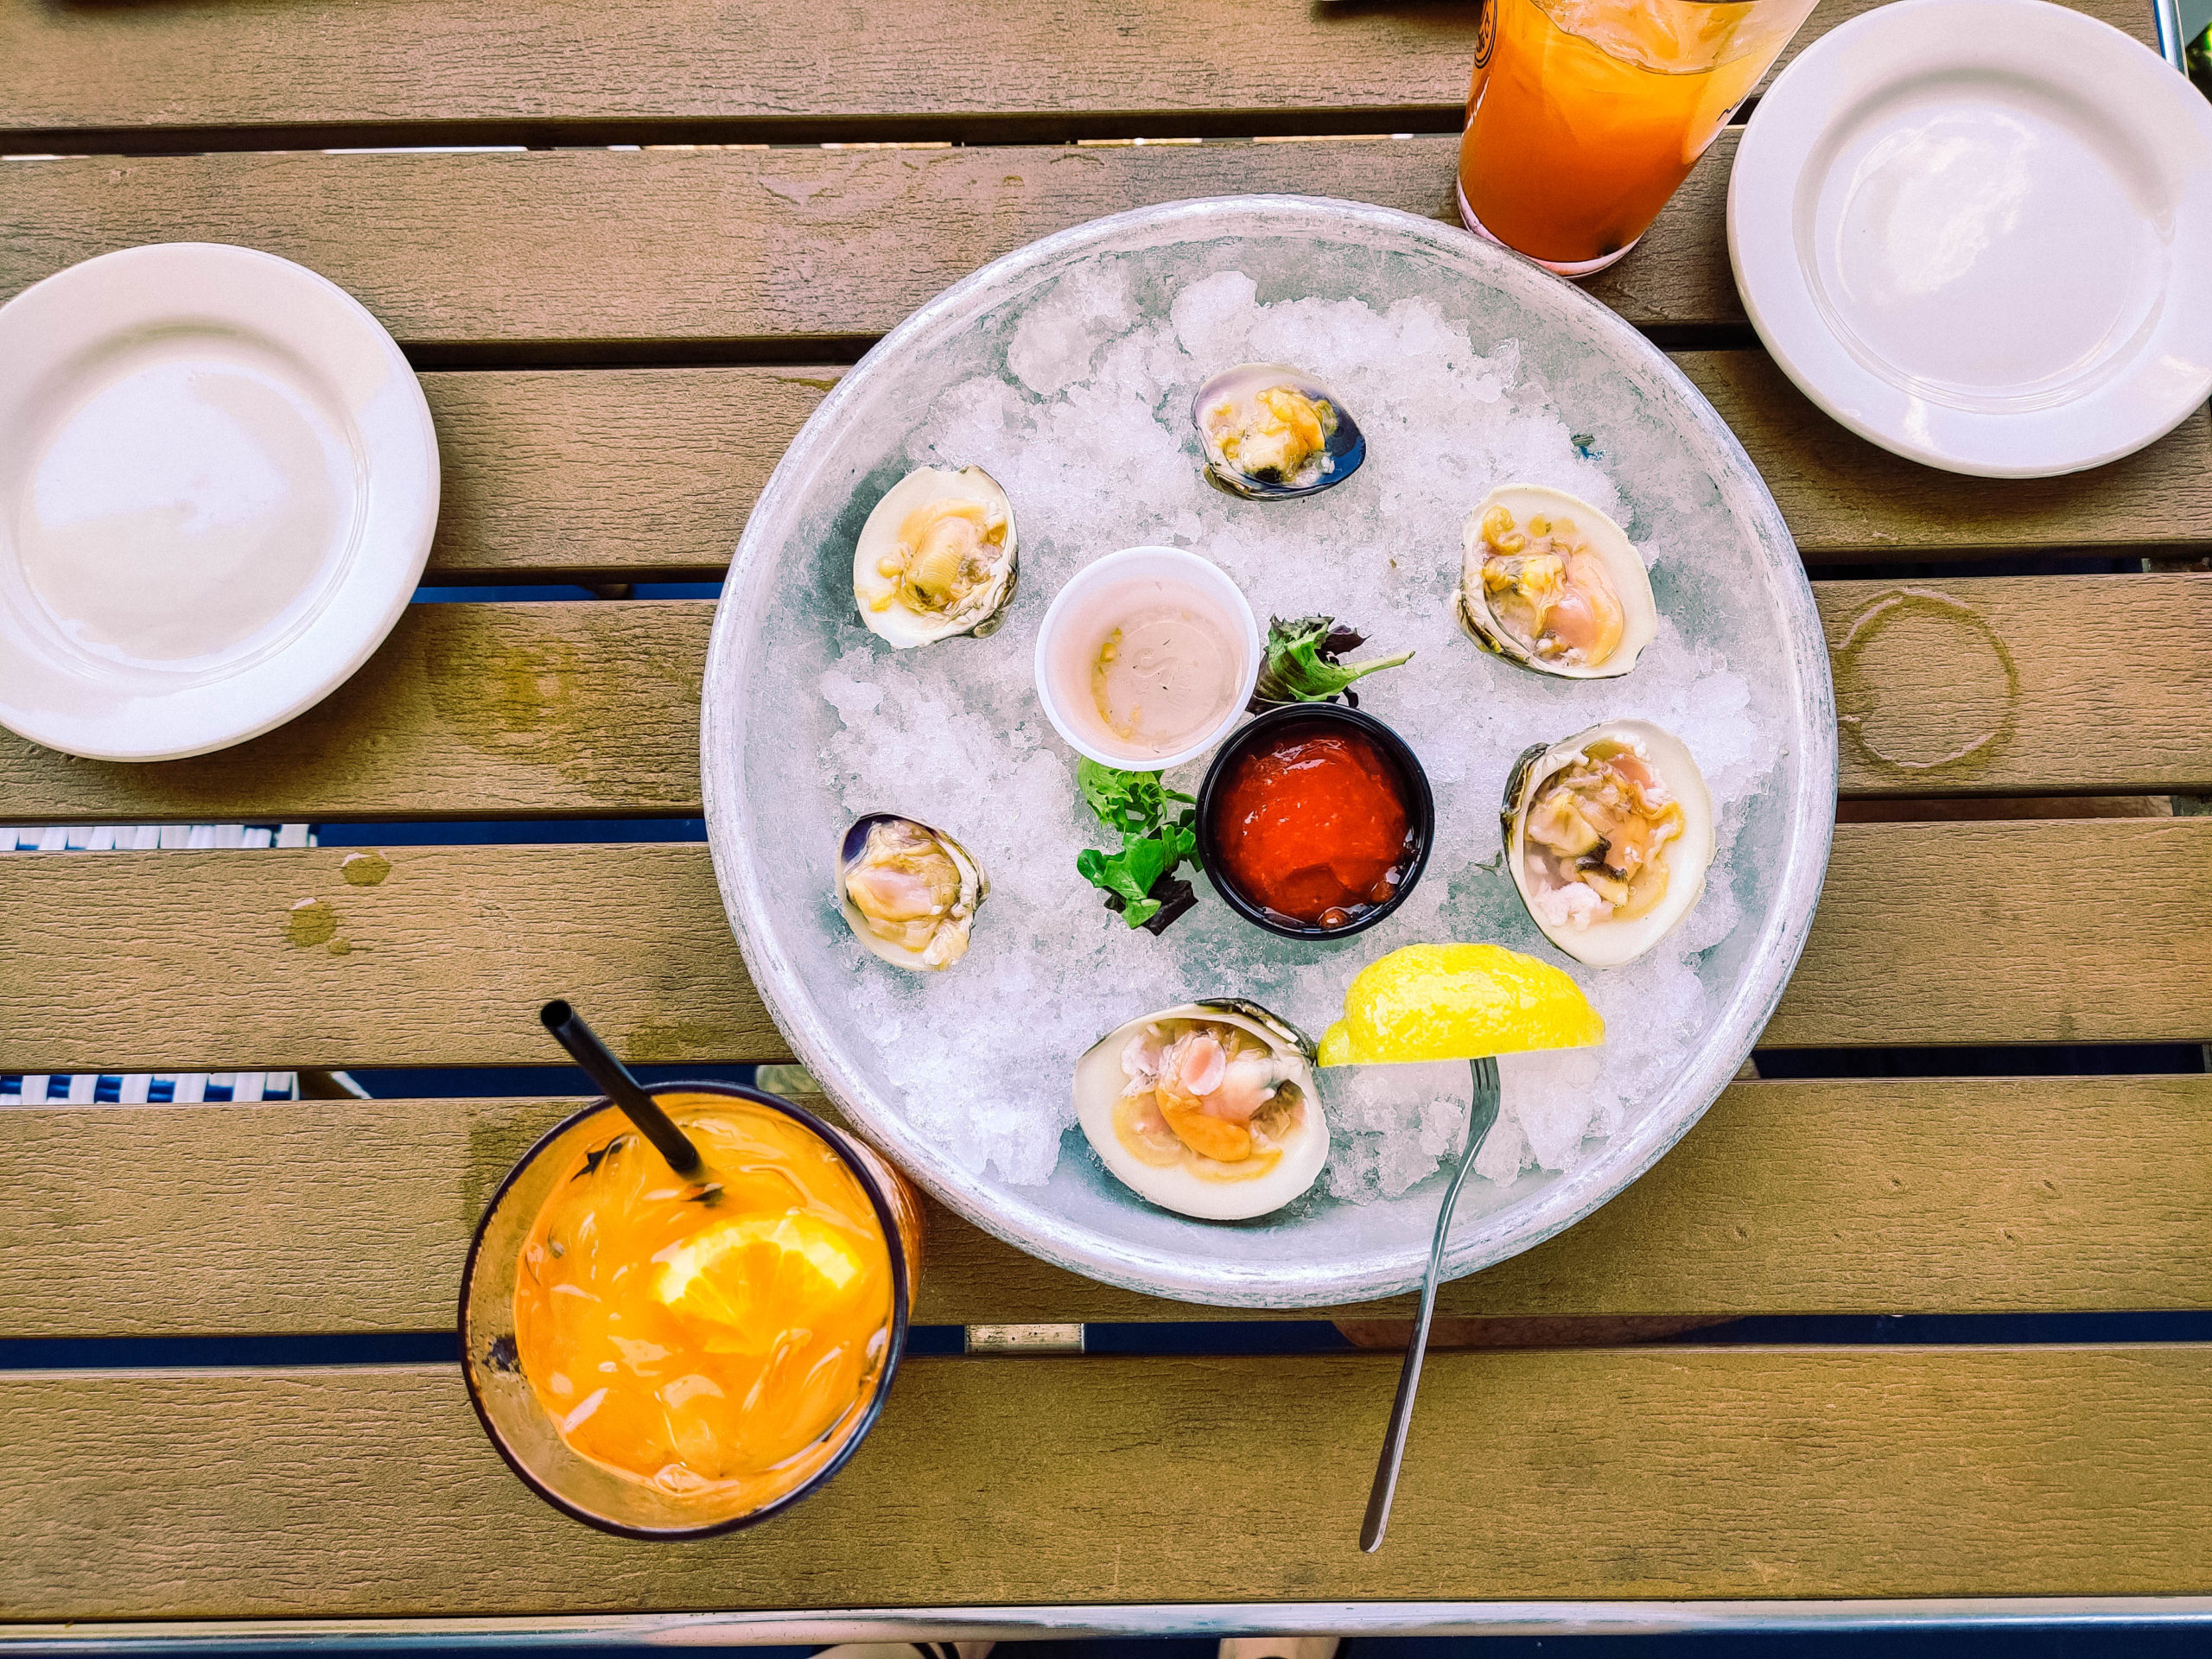 Places to Eat on Block Island: Beachead littleneck clams